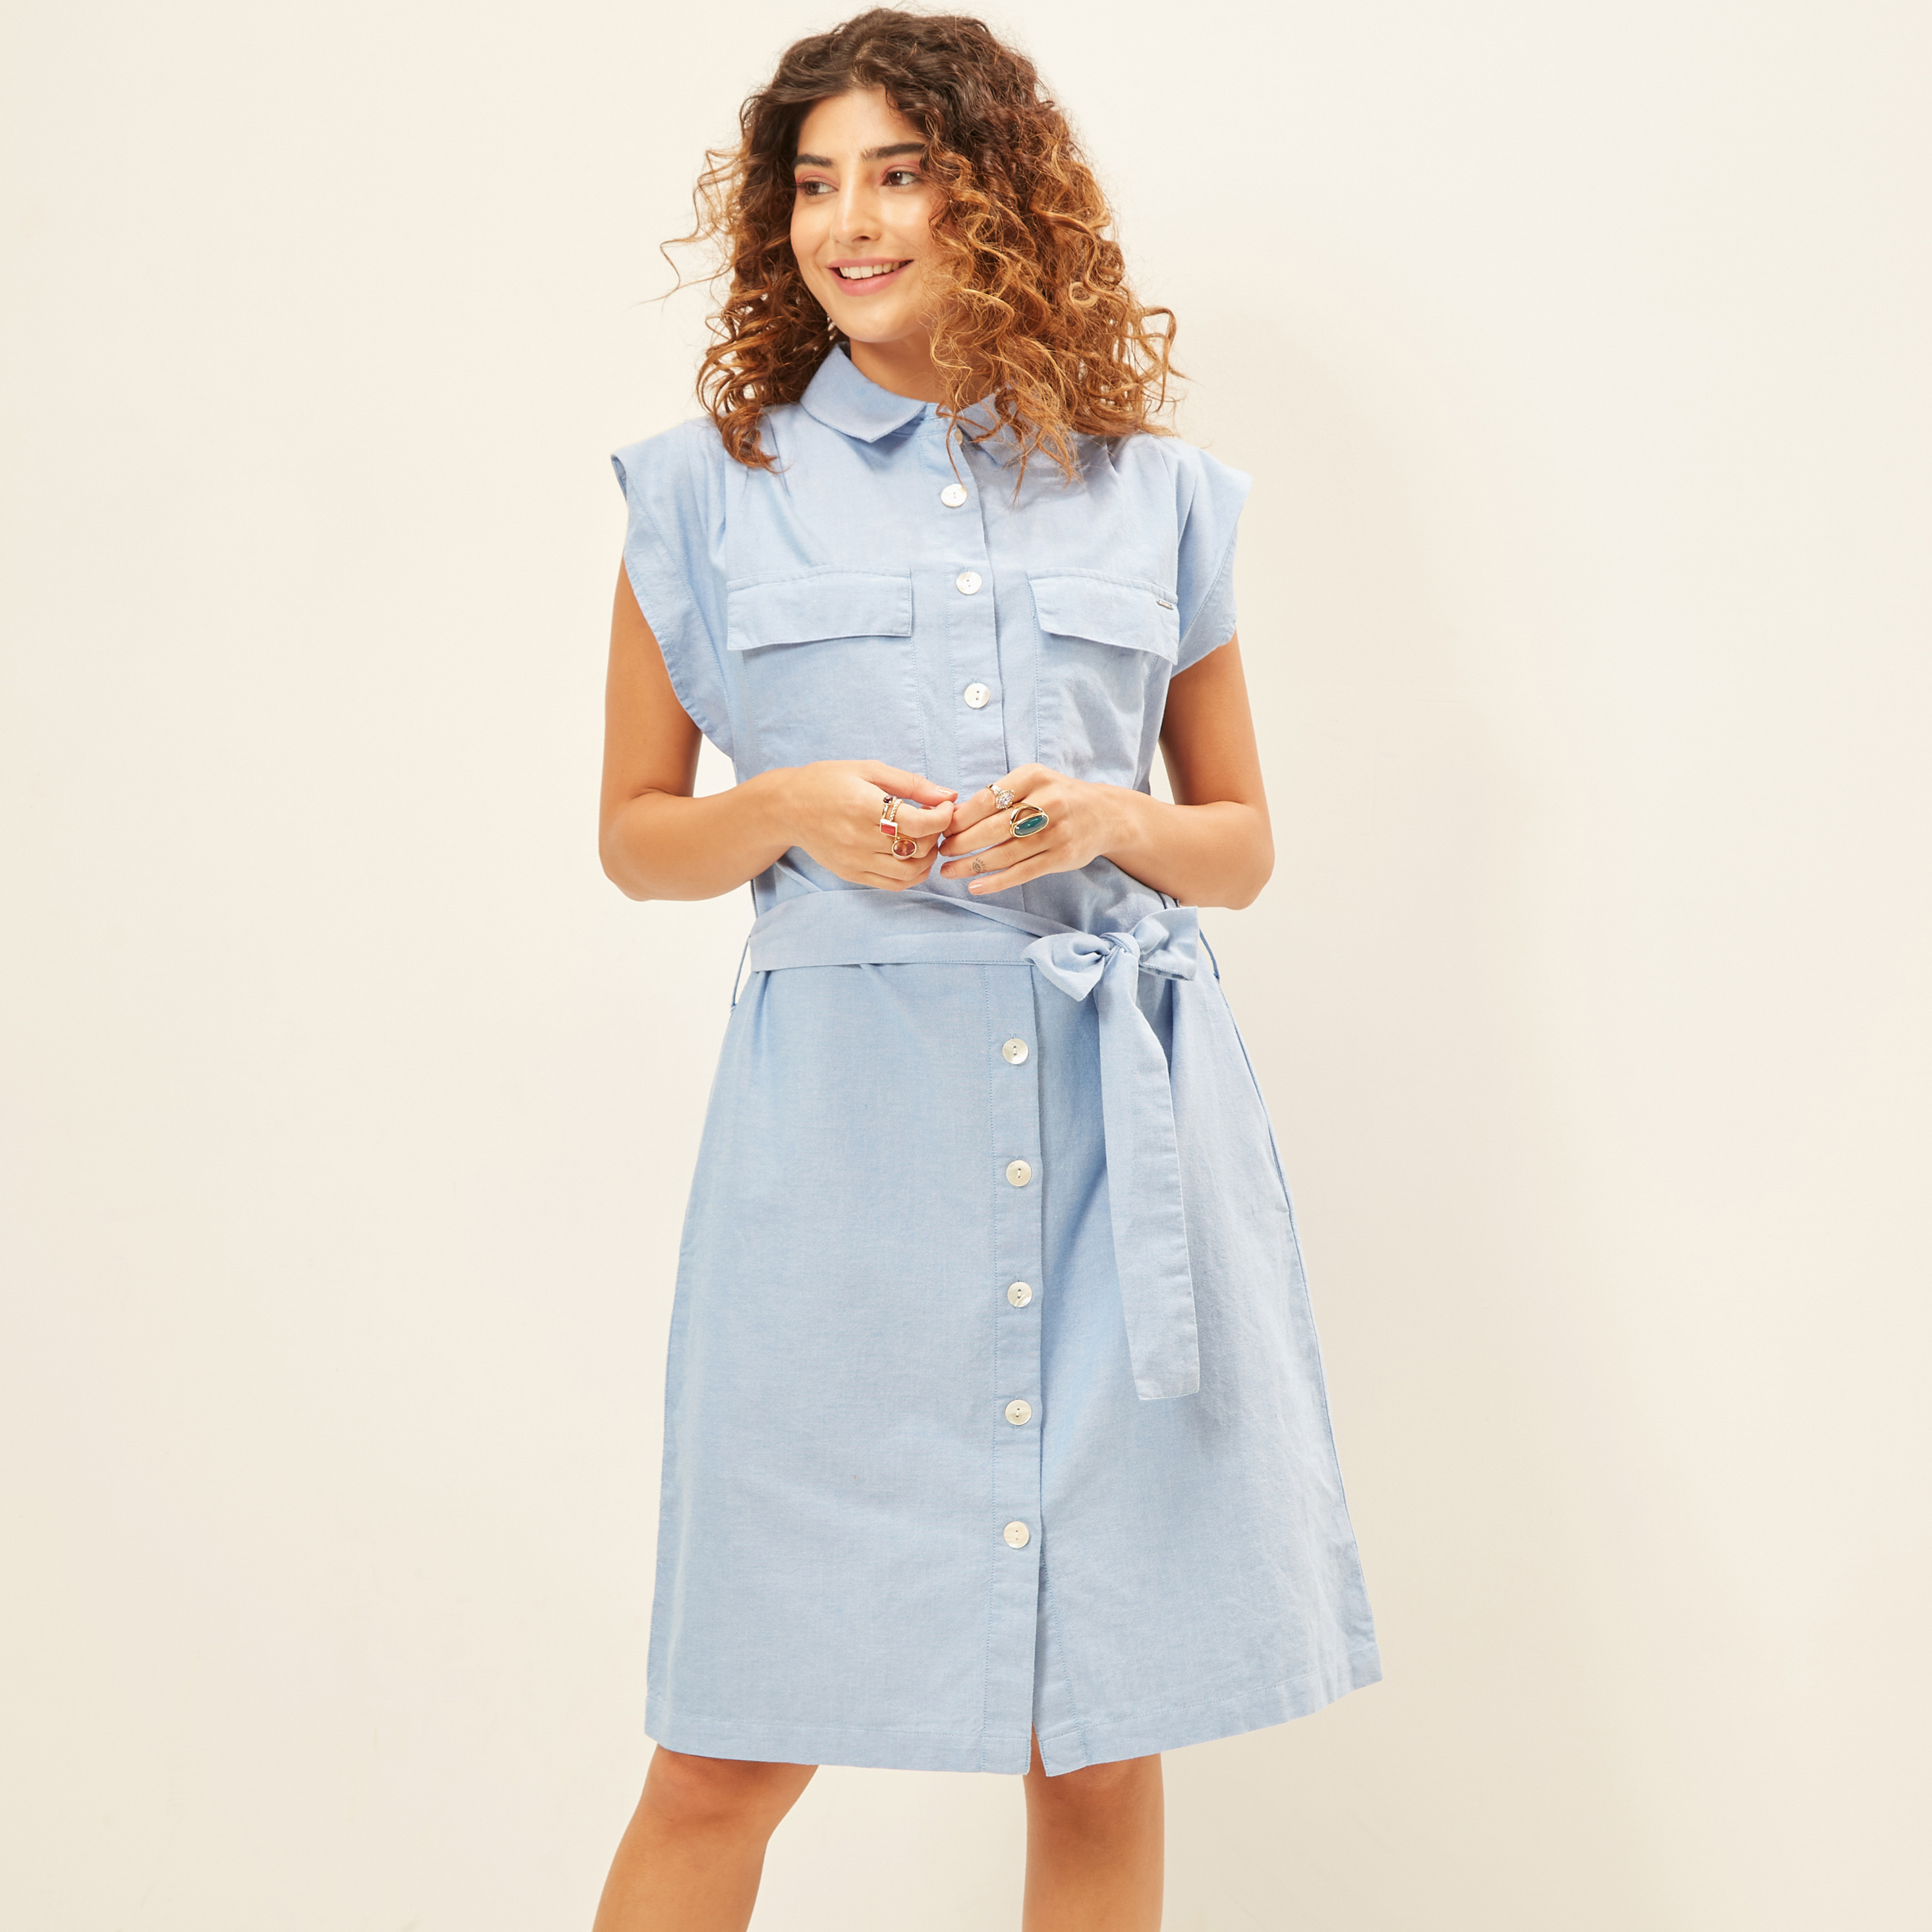 Lee Cooper X H&M Denim Shirt Dress Slouch Uk Size 4 | eBay